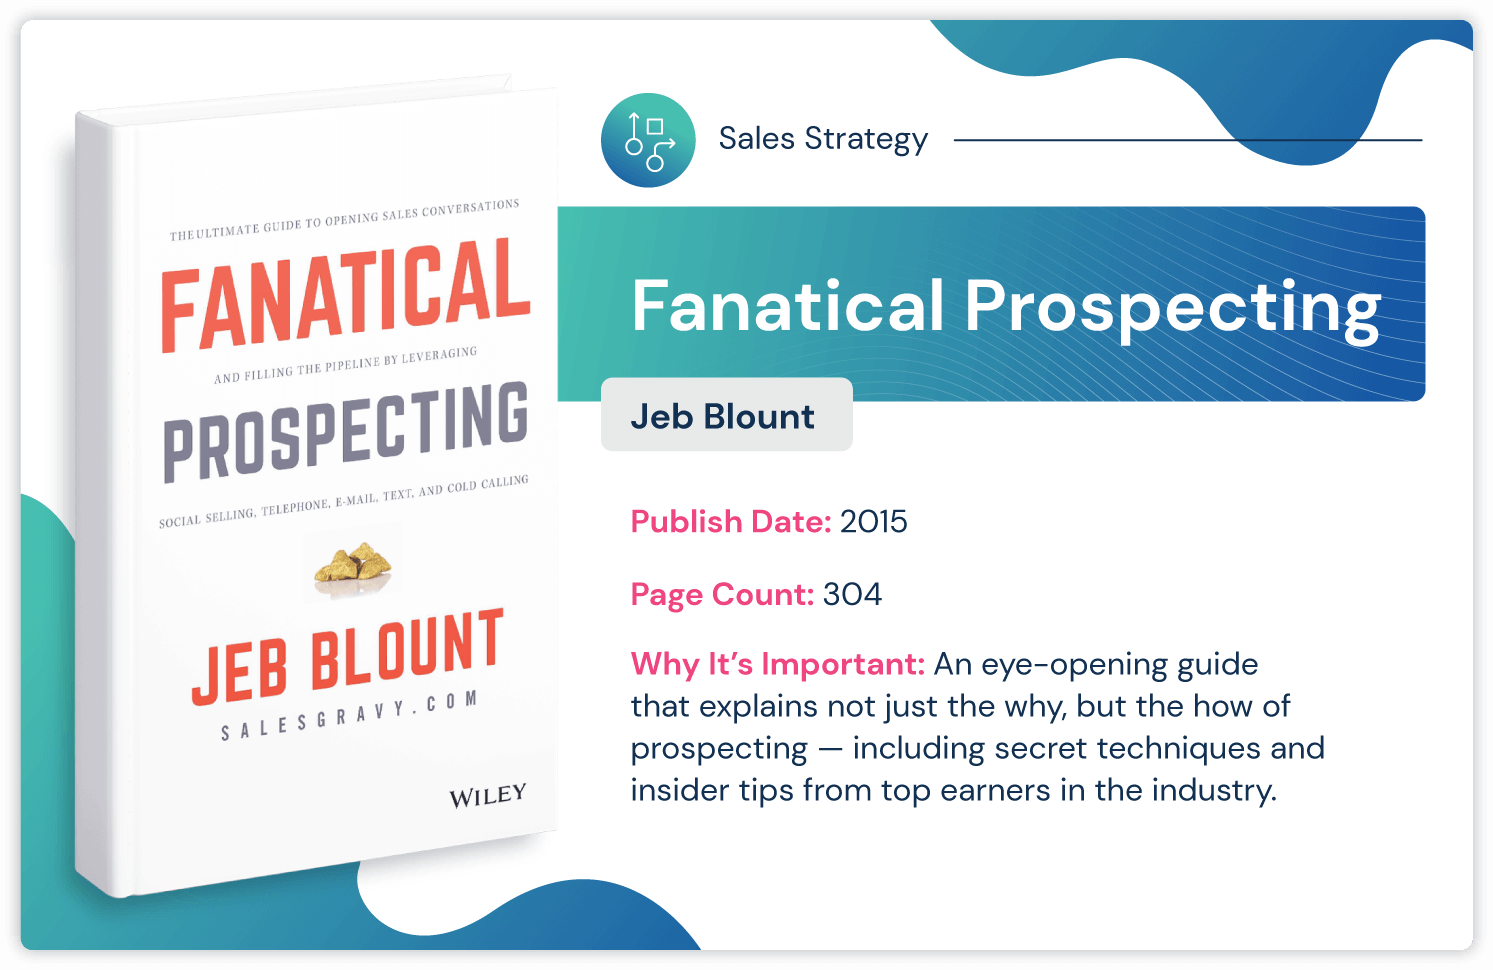 Jeb Blount의 영업 전략 책 "Fanatical Prospecting", 내부자 잠재 고객 발굴 팁에 대한 2015년 발행 및 304페이지